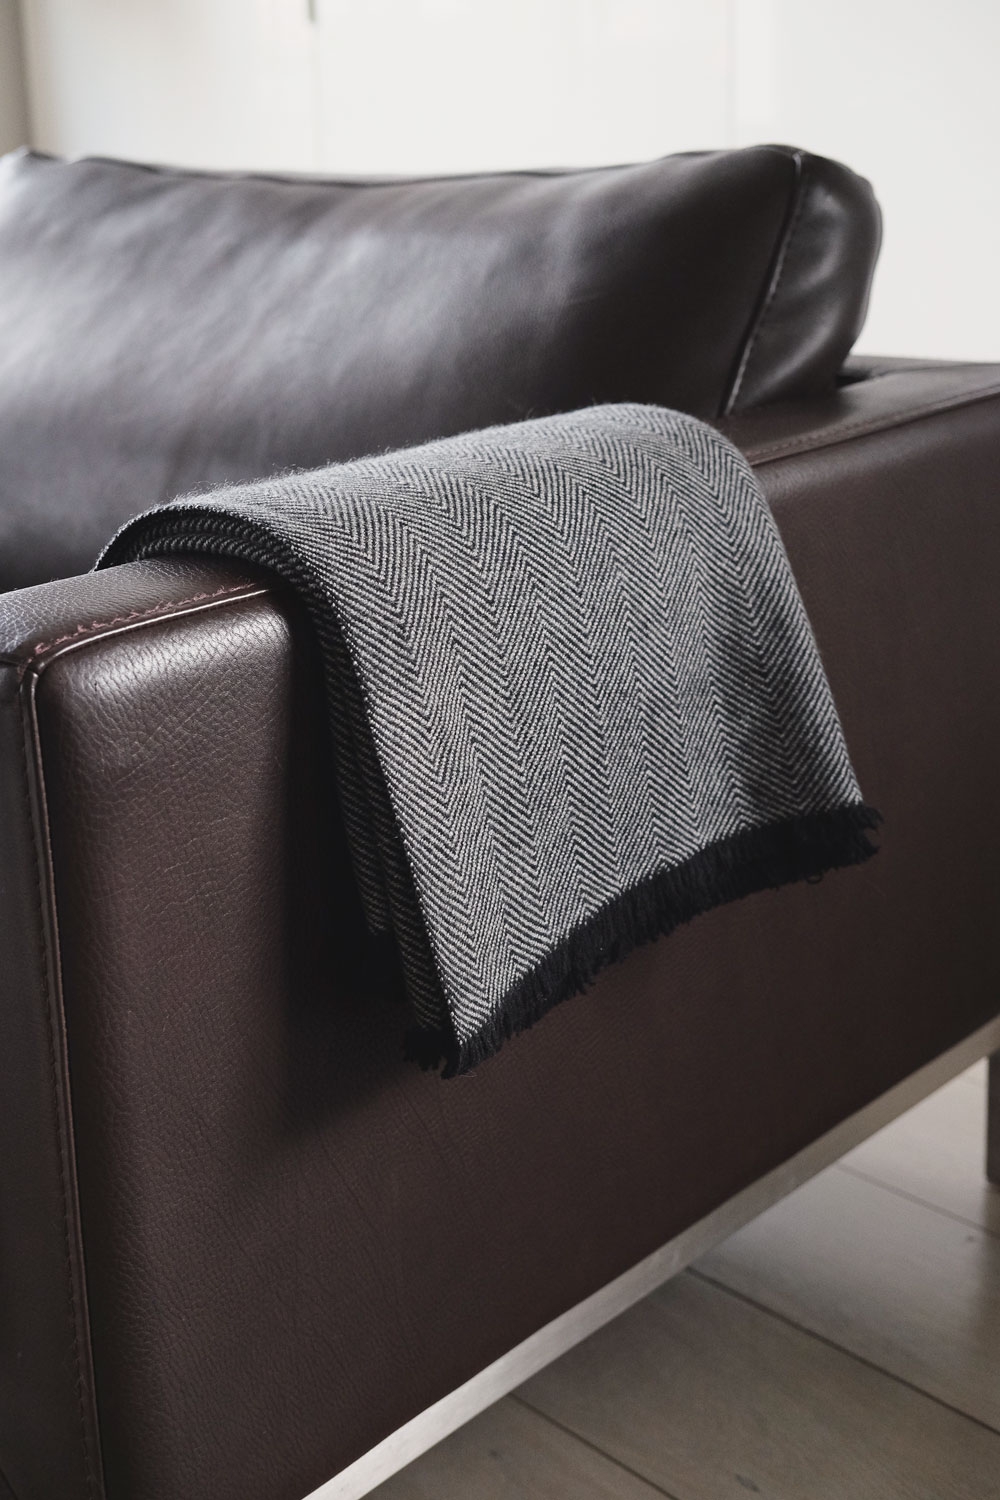 Cashmere accessories blanket erable 130 x 190 black grey marl 130 x 190 cm